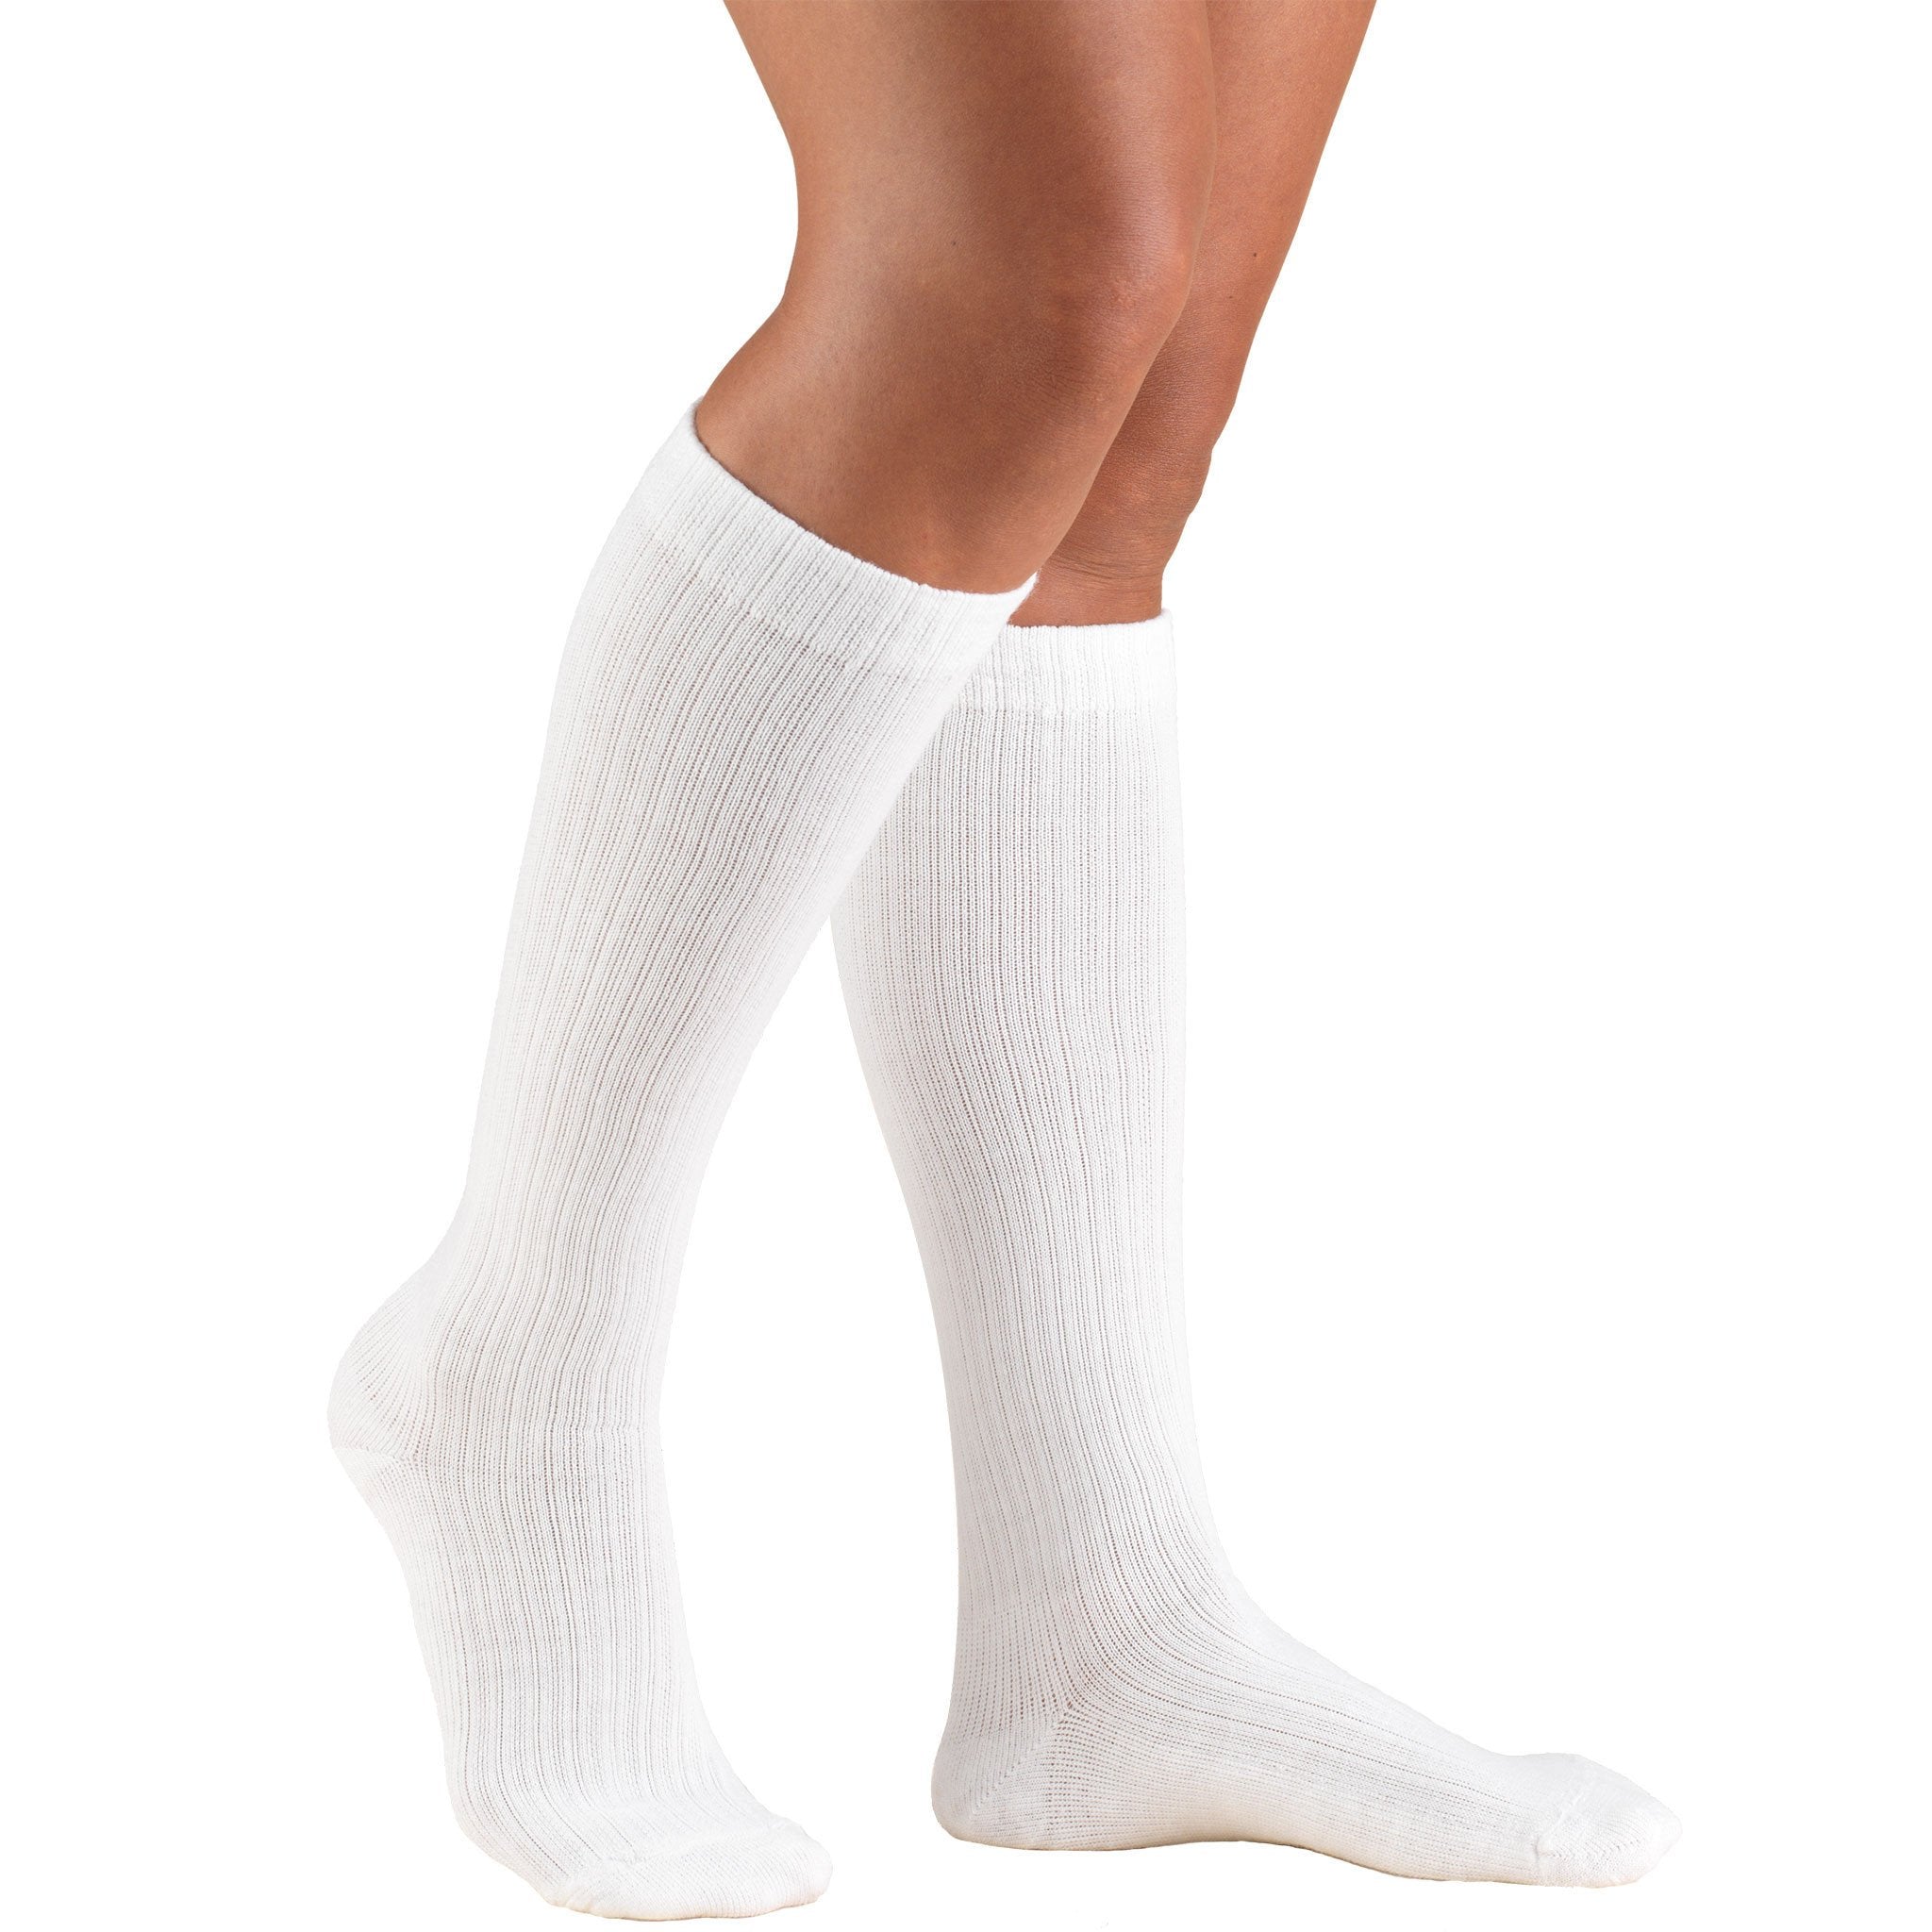 Truform 1963 Women's Knee High 10-20 mmHg Compression Casual Socks